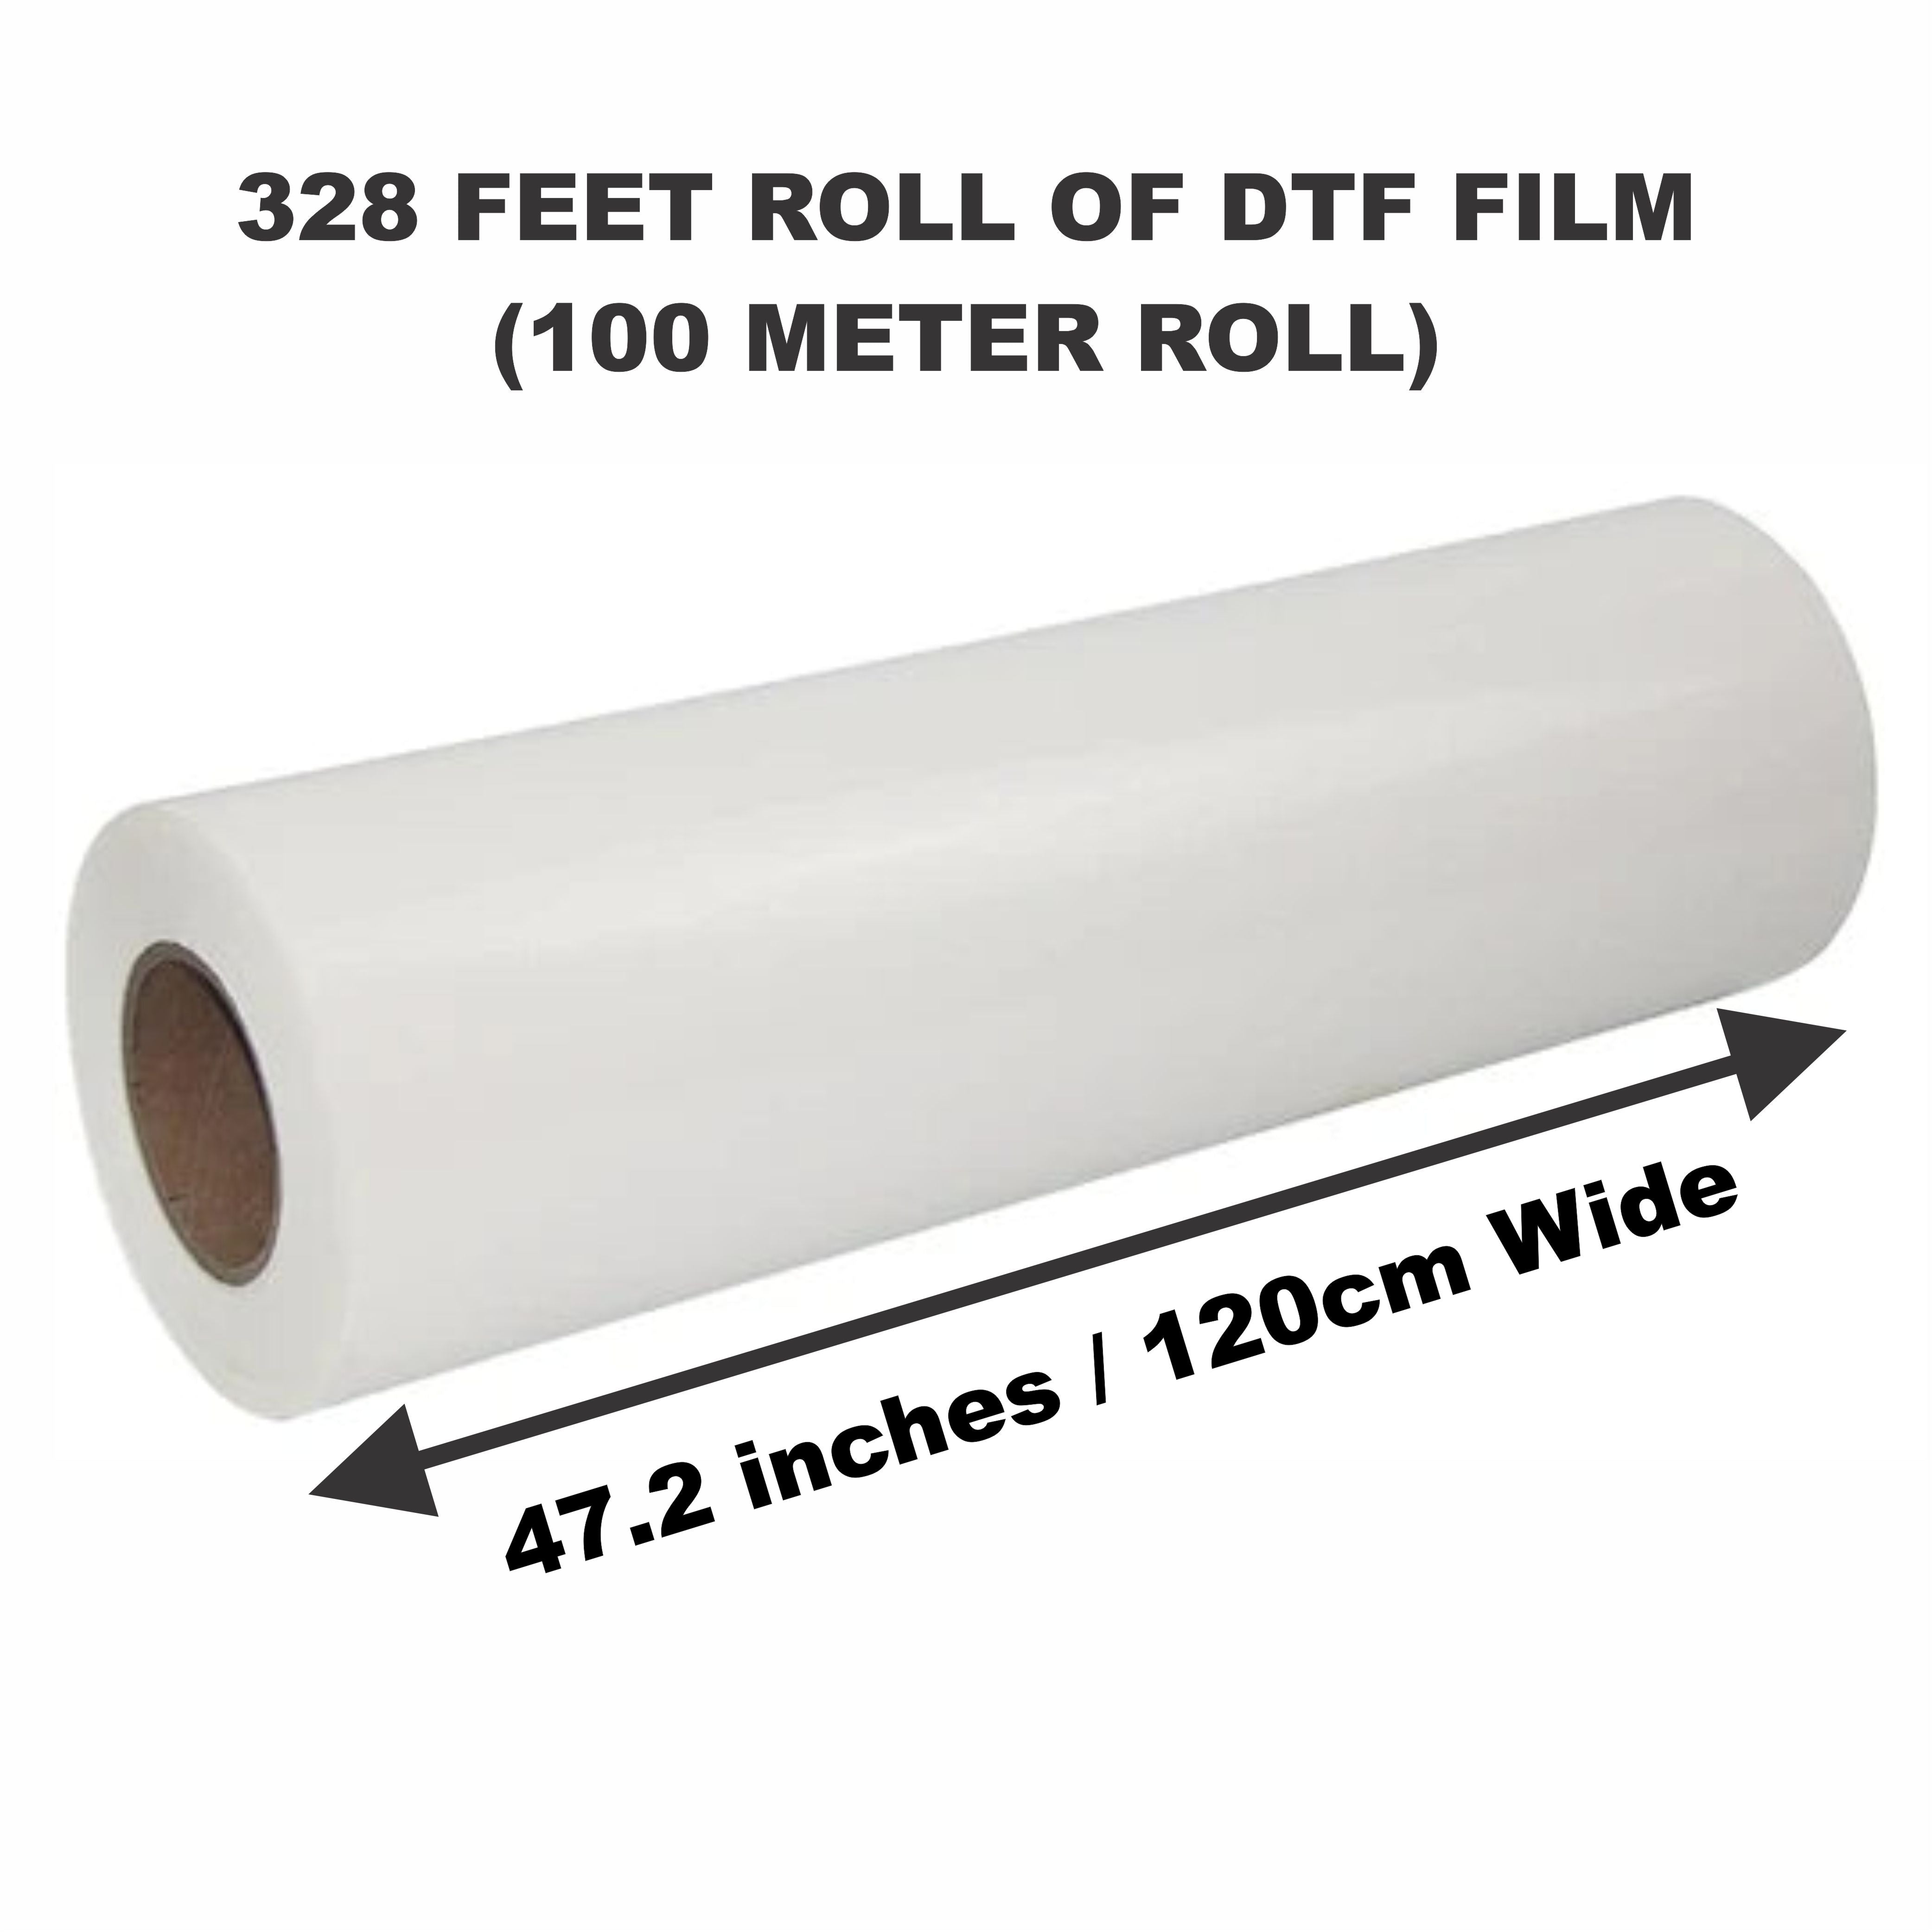 MAYATX DTF Transfer Film Double Sided DTF Film Roll 23.6 x 325 ft